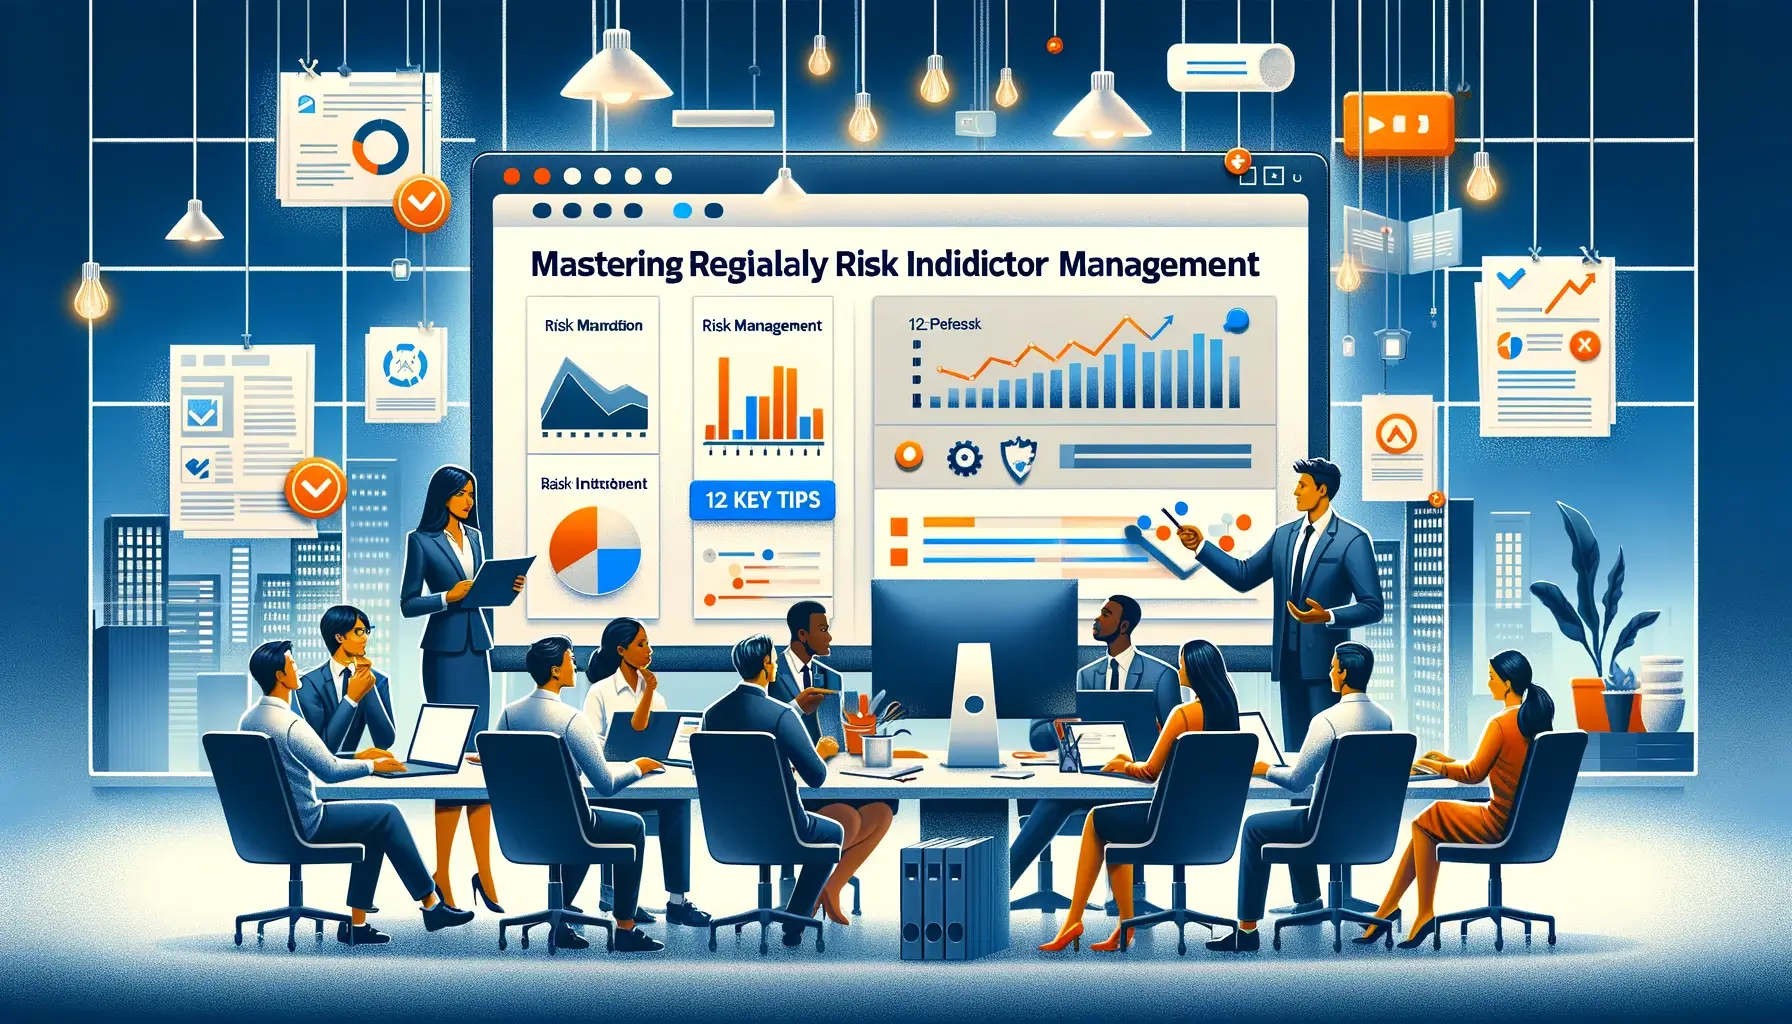 Regulatory Risk Indicator Management, mastering